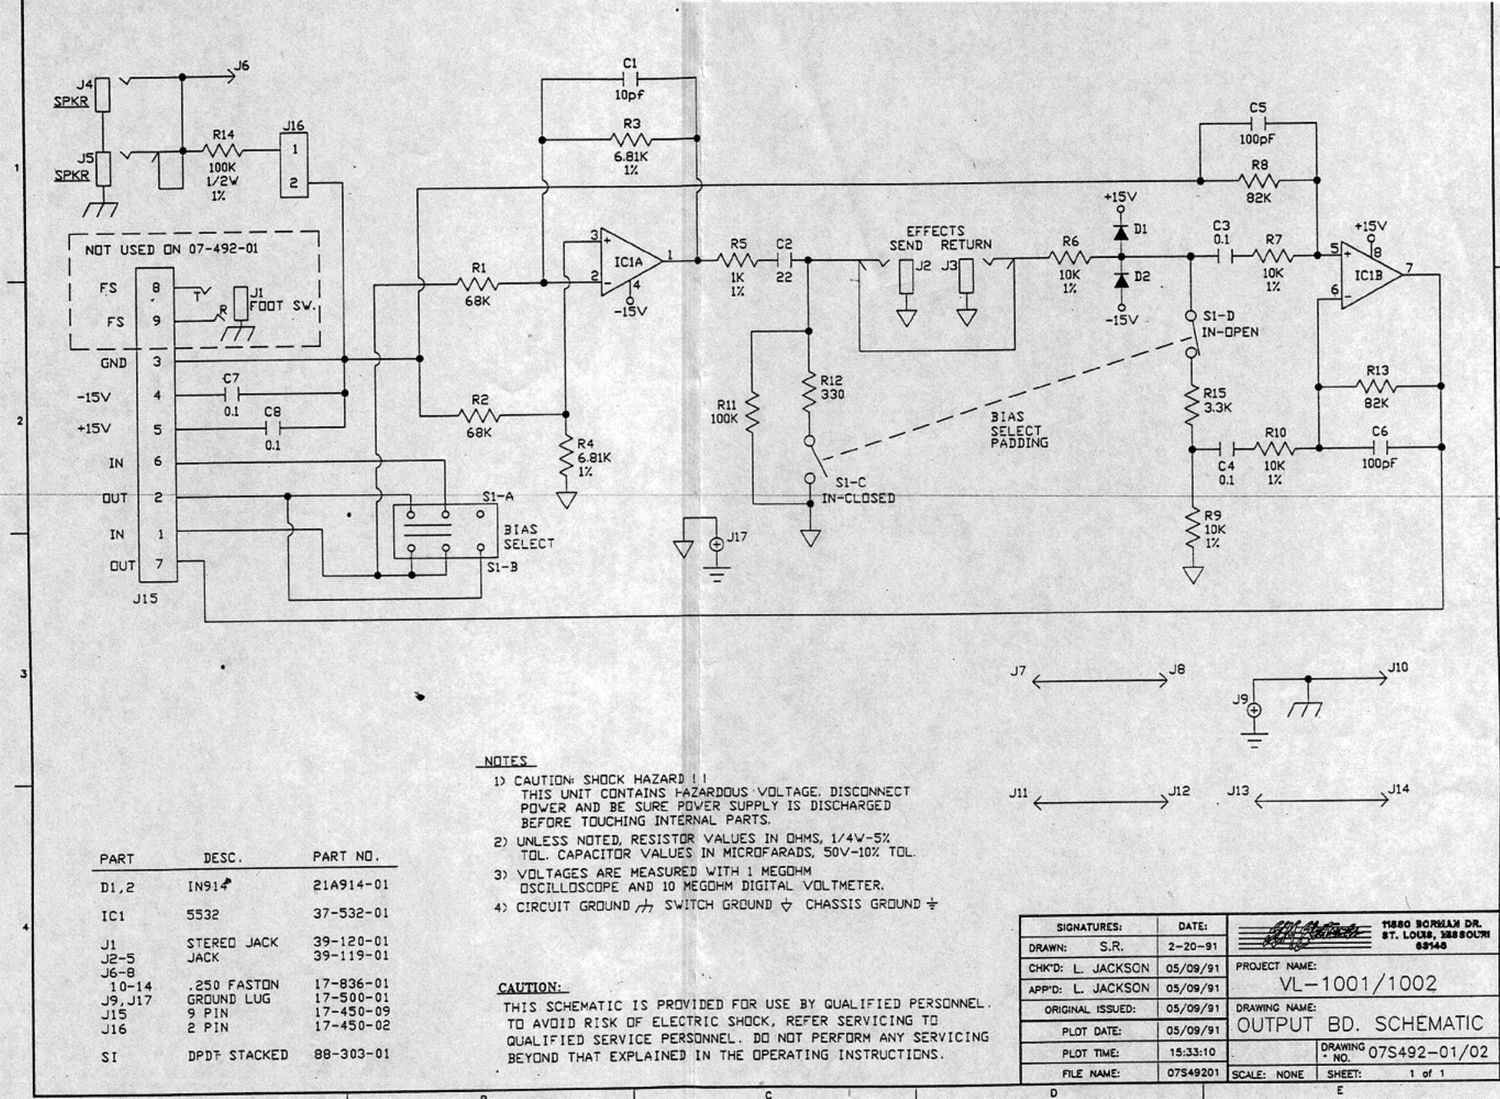 ampeg vl 1001 1002 output board schematic